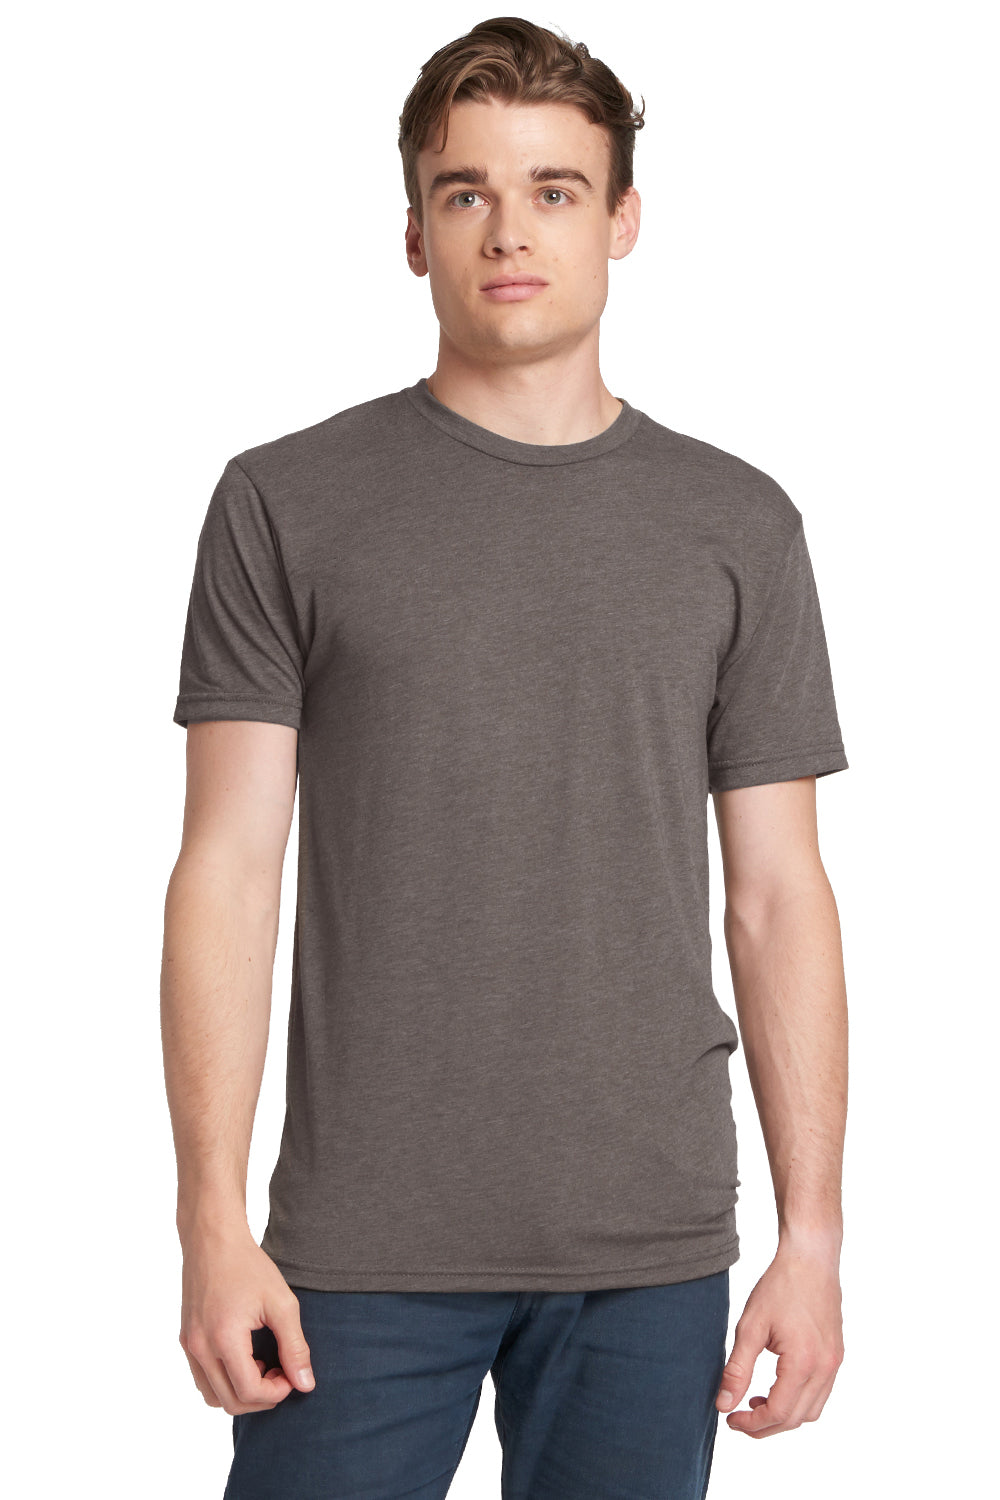 Next Level 6010 Mens Jersey Short Sleeve Crewneck T-Shirt Venetian Grey Front